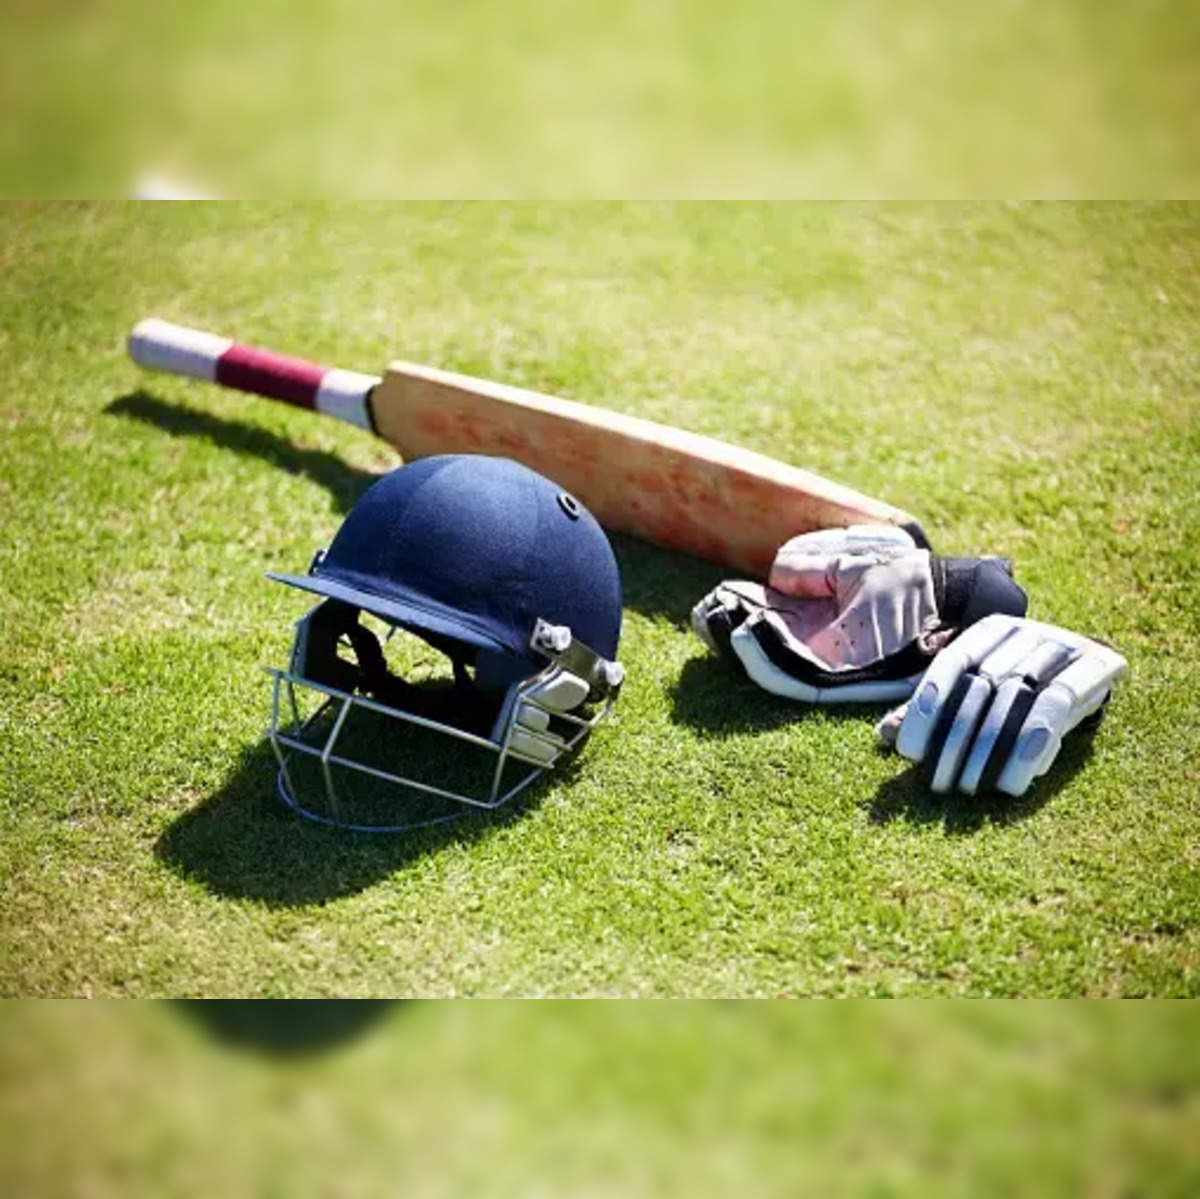 Starter cricket equipment for junior players